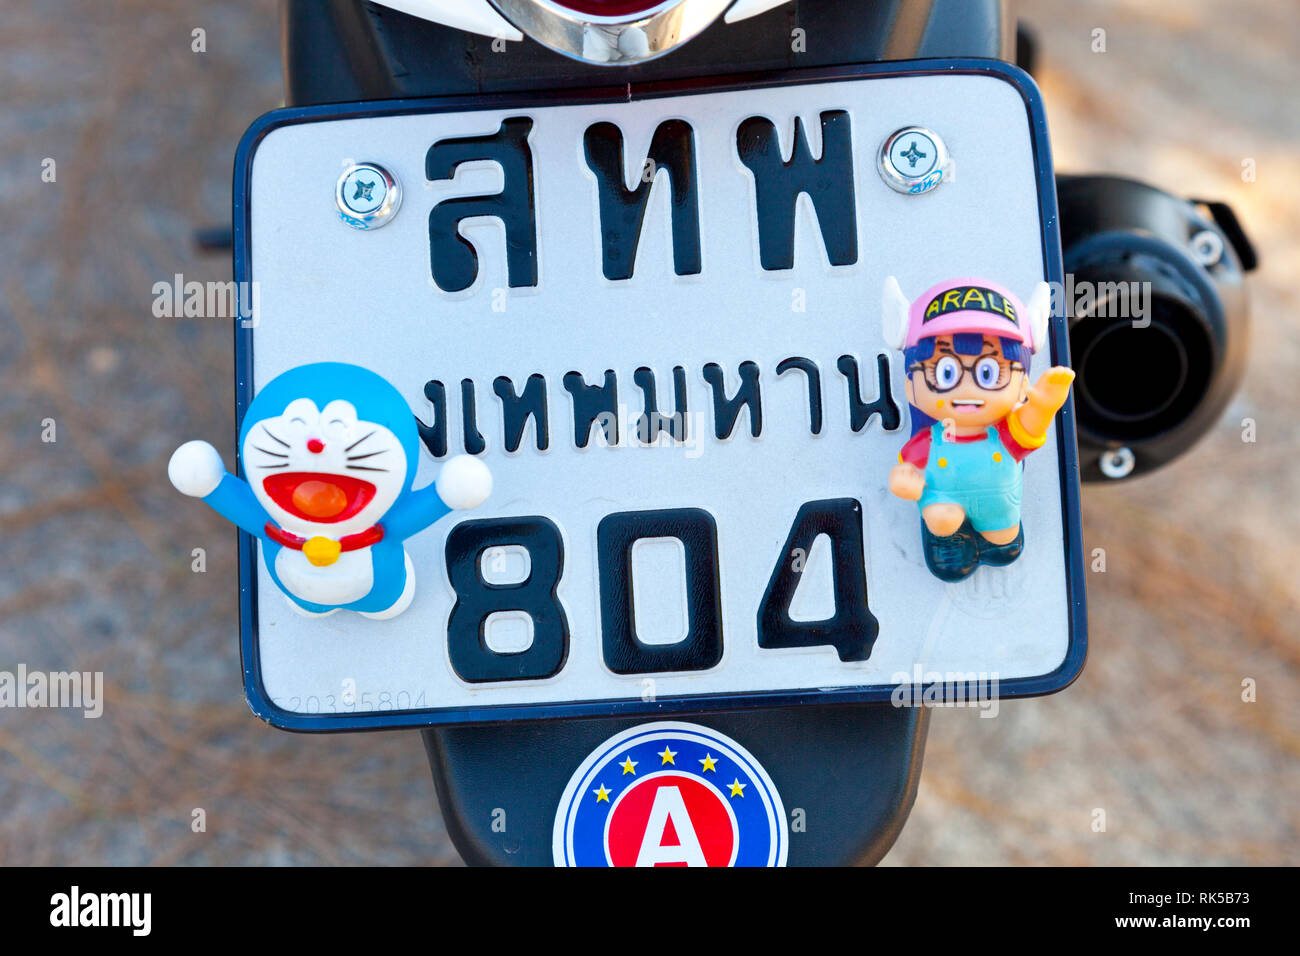 Motorcycle number plate. Phang Nga Bay, Andaman Sea, Thailand, Asia Stock Photo